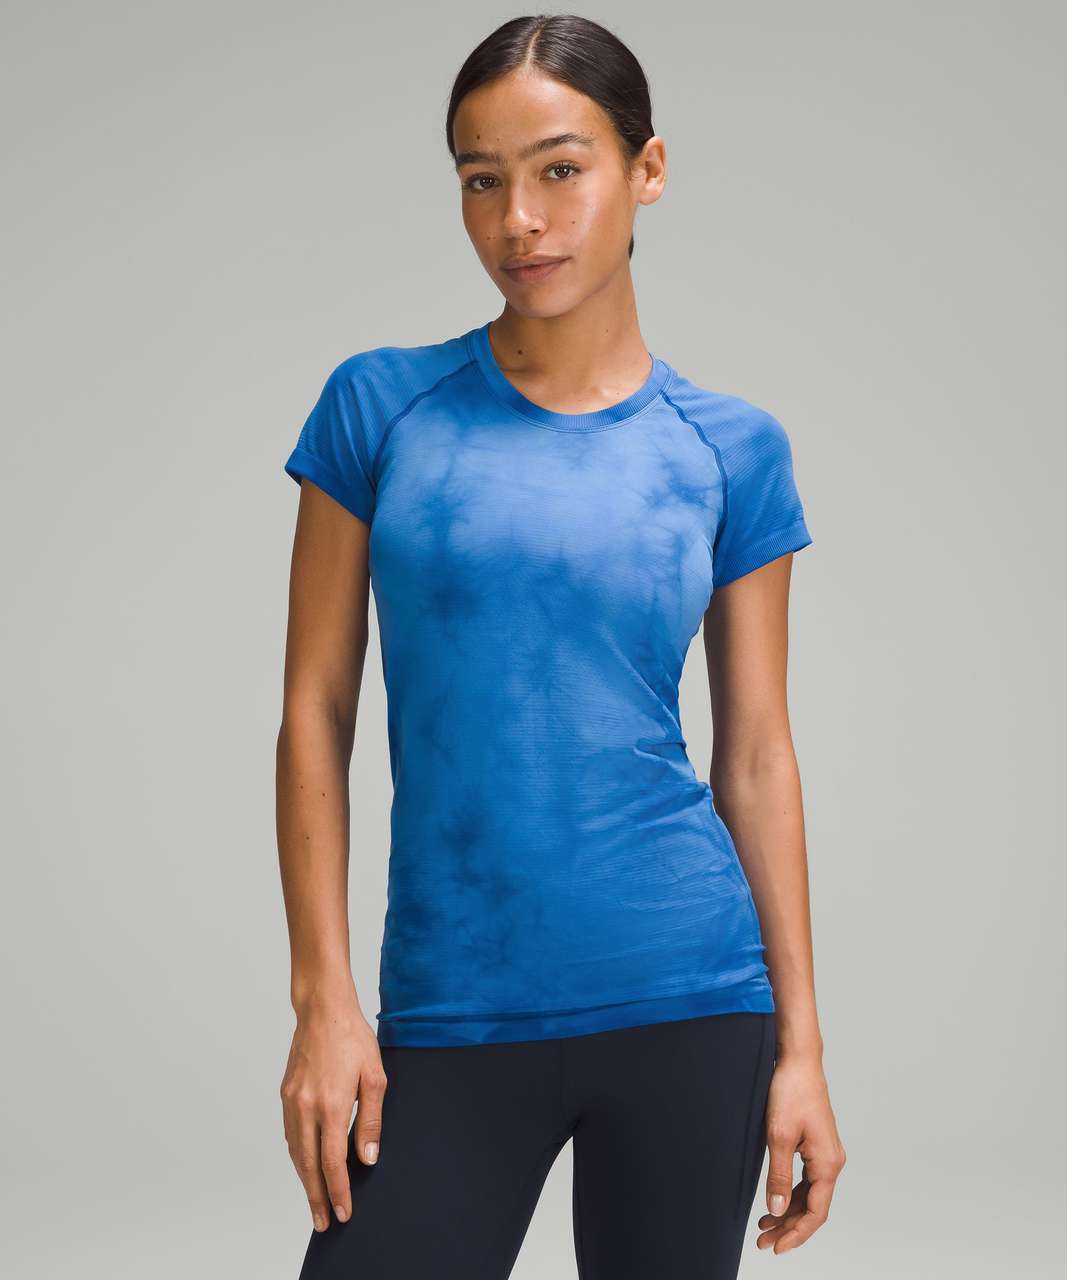 Lululemon Swiftly Tech Short-Sleeve Shirt 2.0 - Marble Dye Pipe